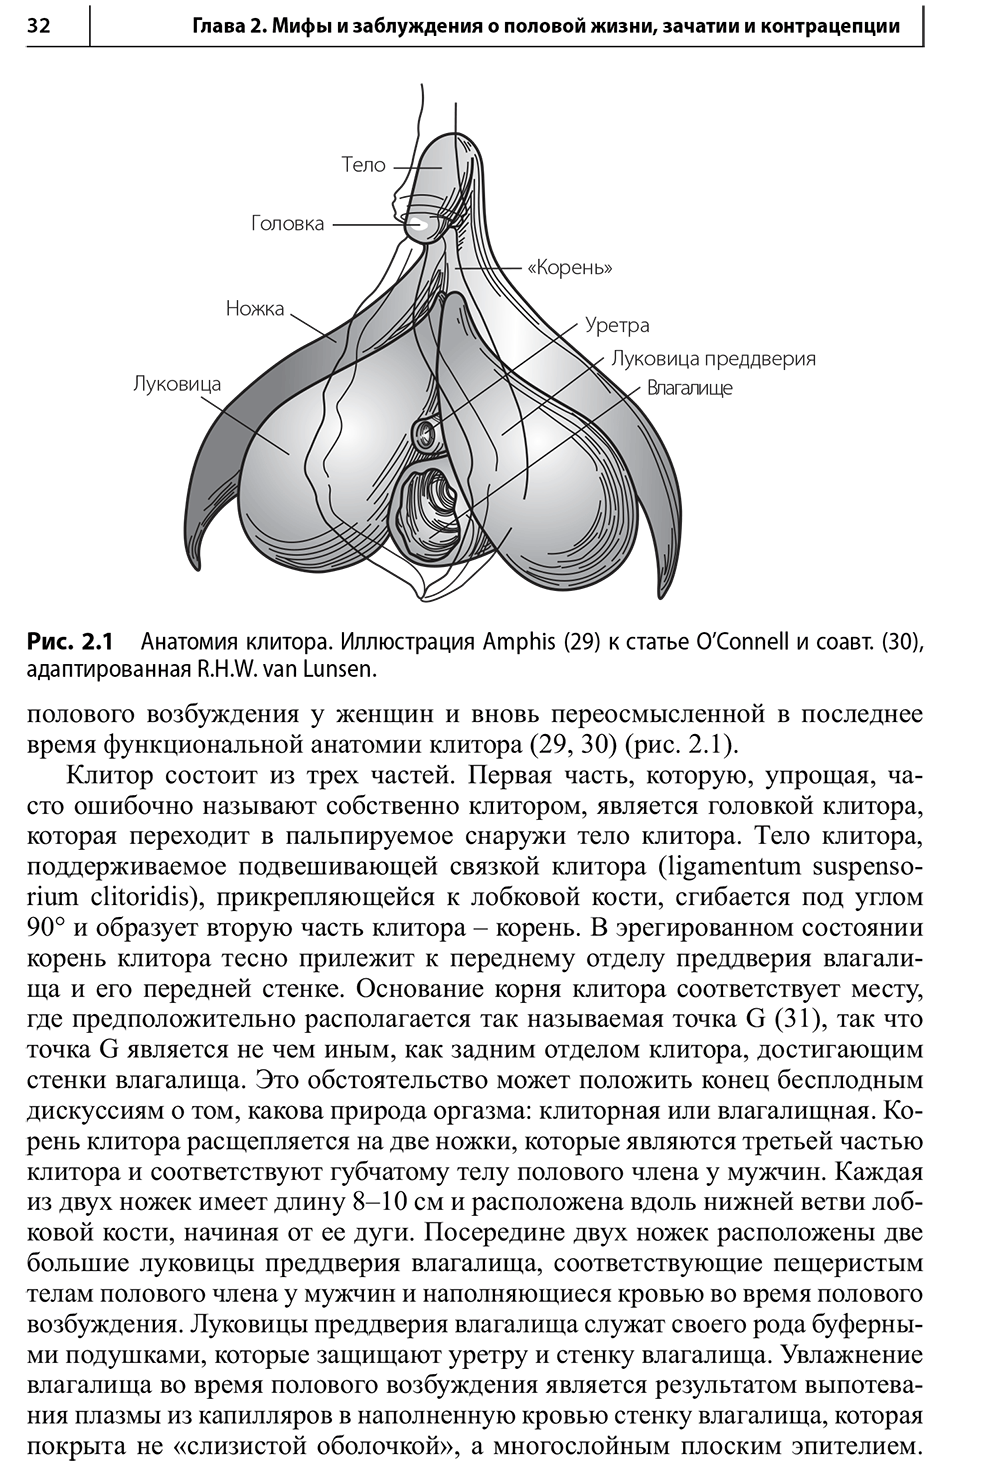 Анатомия клитора.